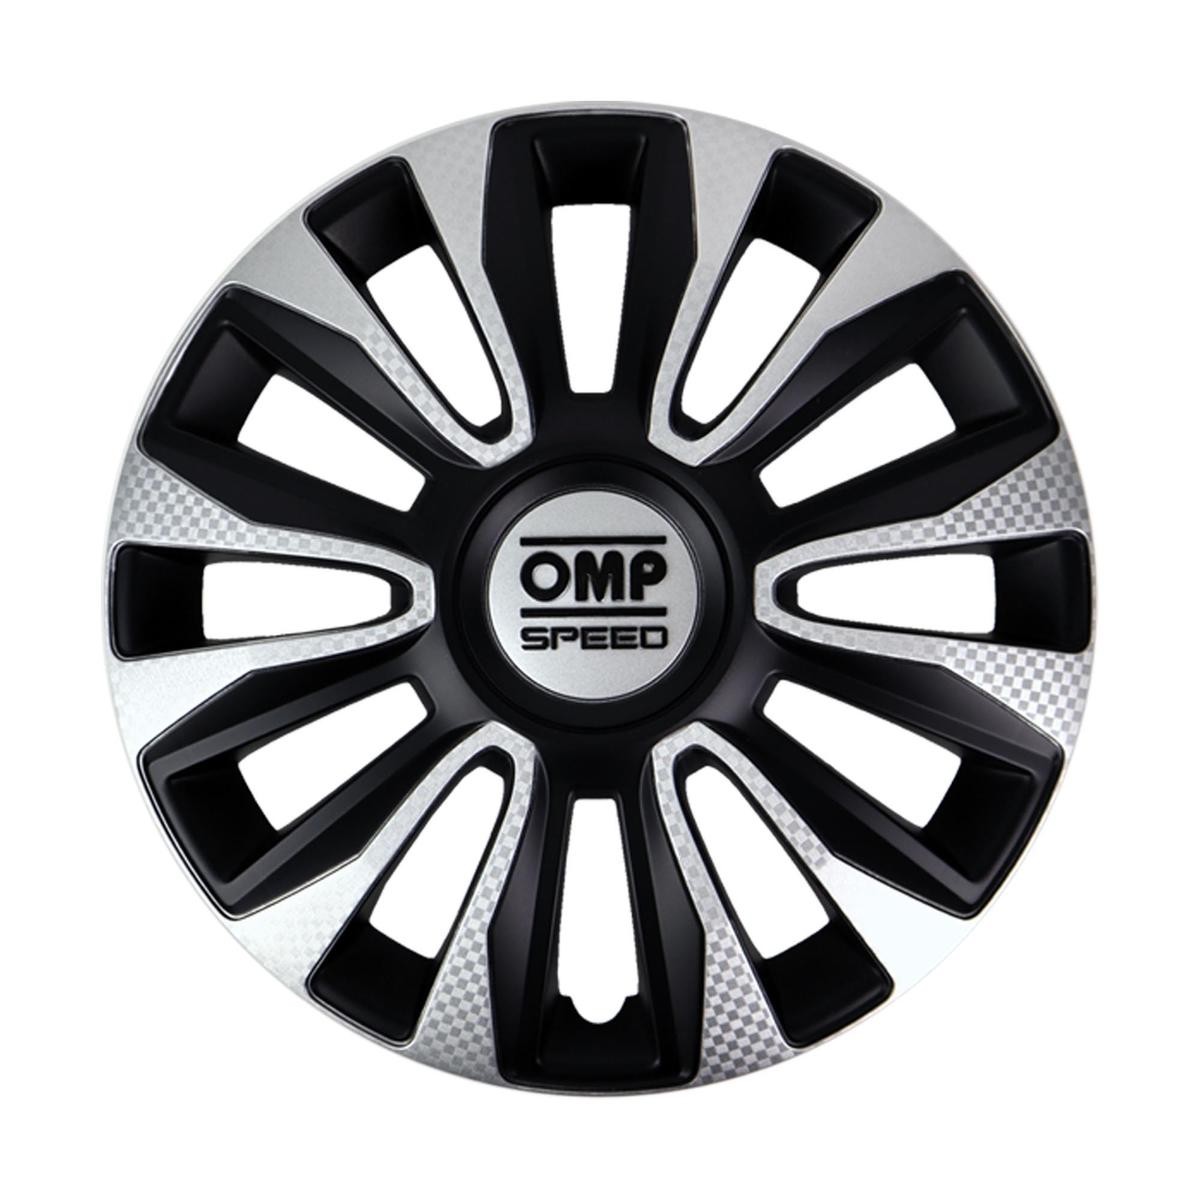 OMP OMPS07011422 Car wheel trims VW Golf 4 (1J1) 14 Inch black/silver, Carbon